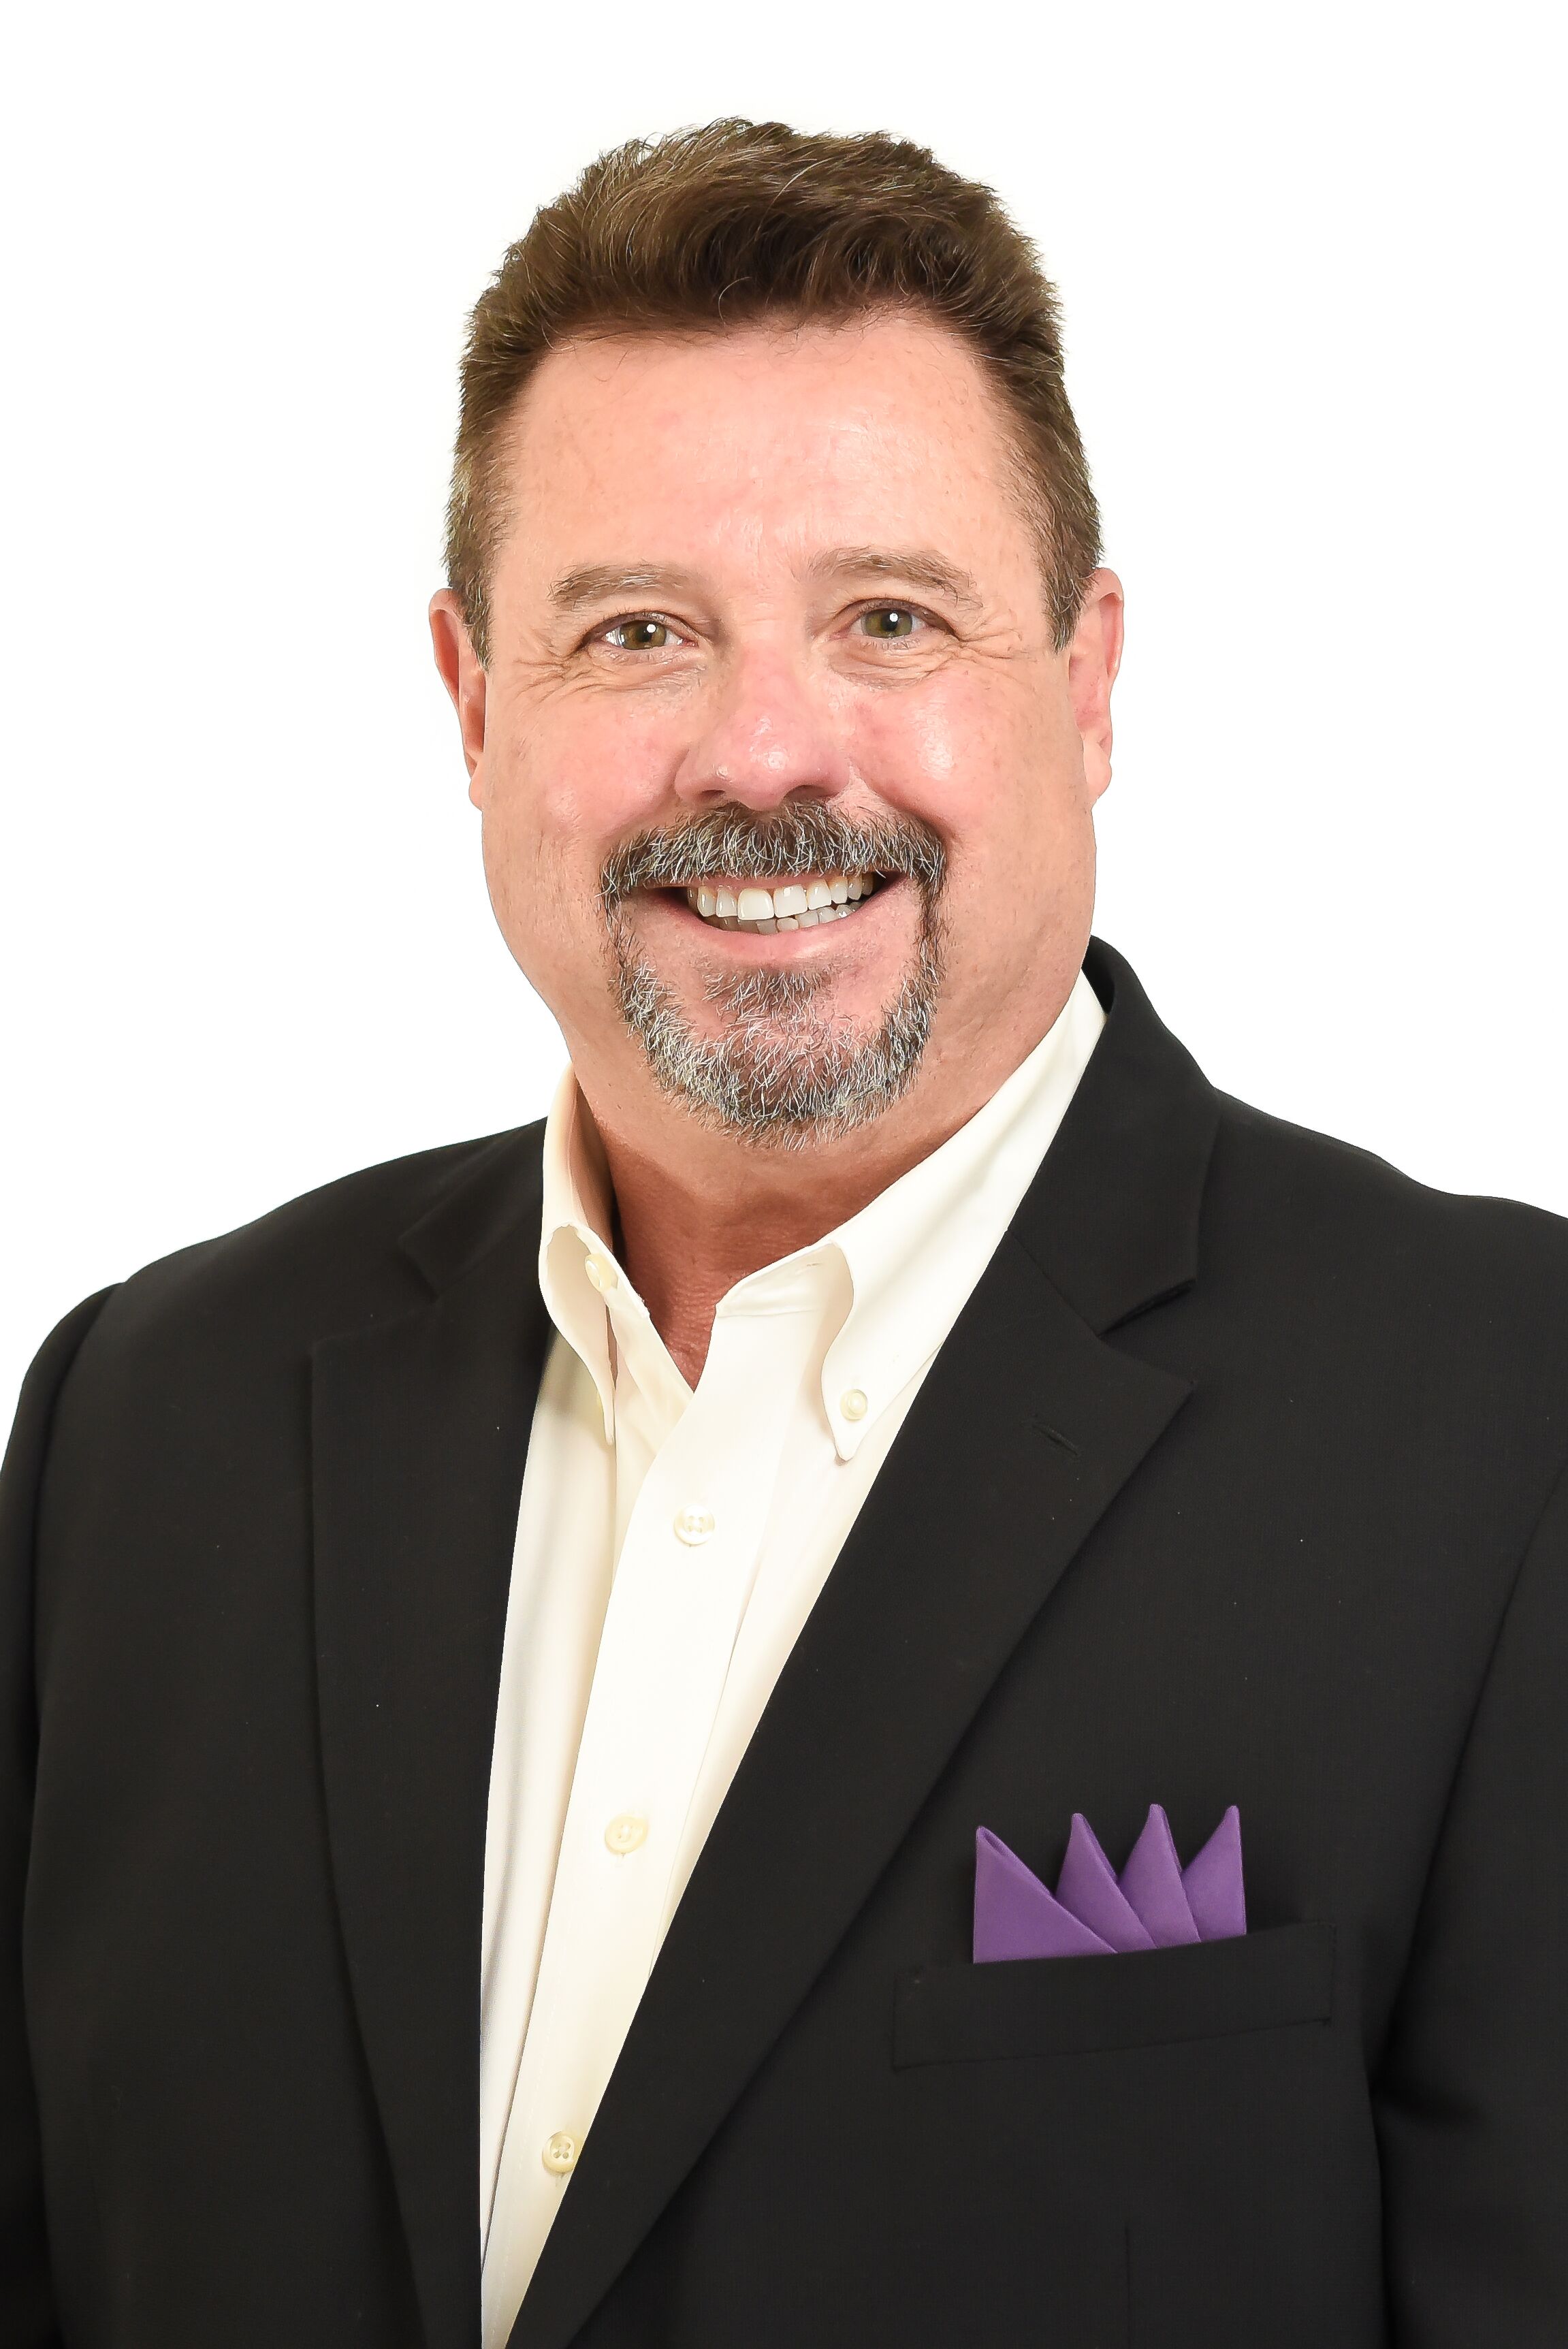 Curtis McMichael | Health and Life Insurance Agent | Oklahoma City, OK 73162